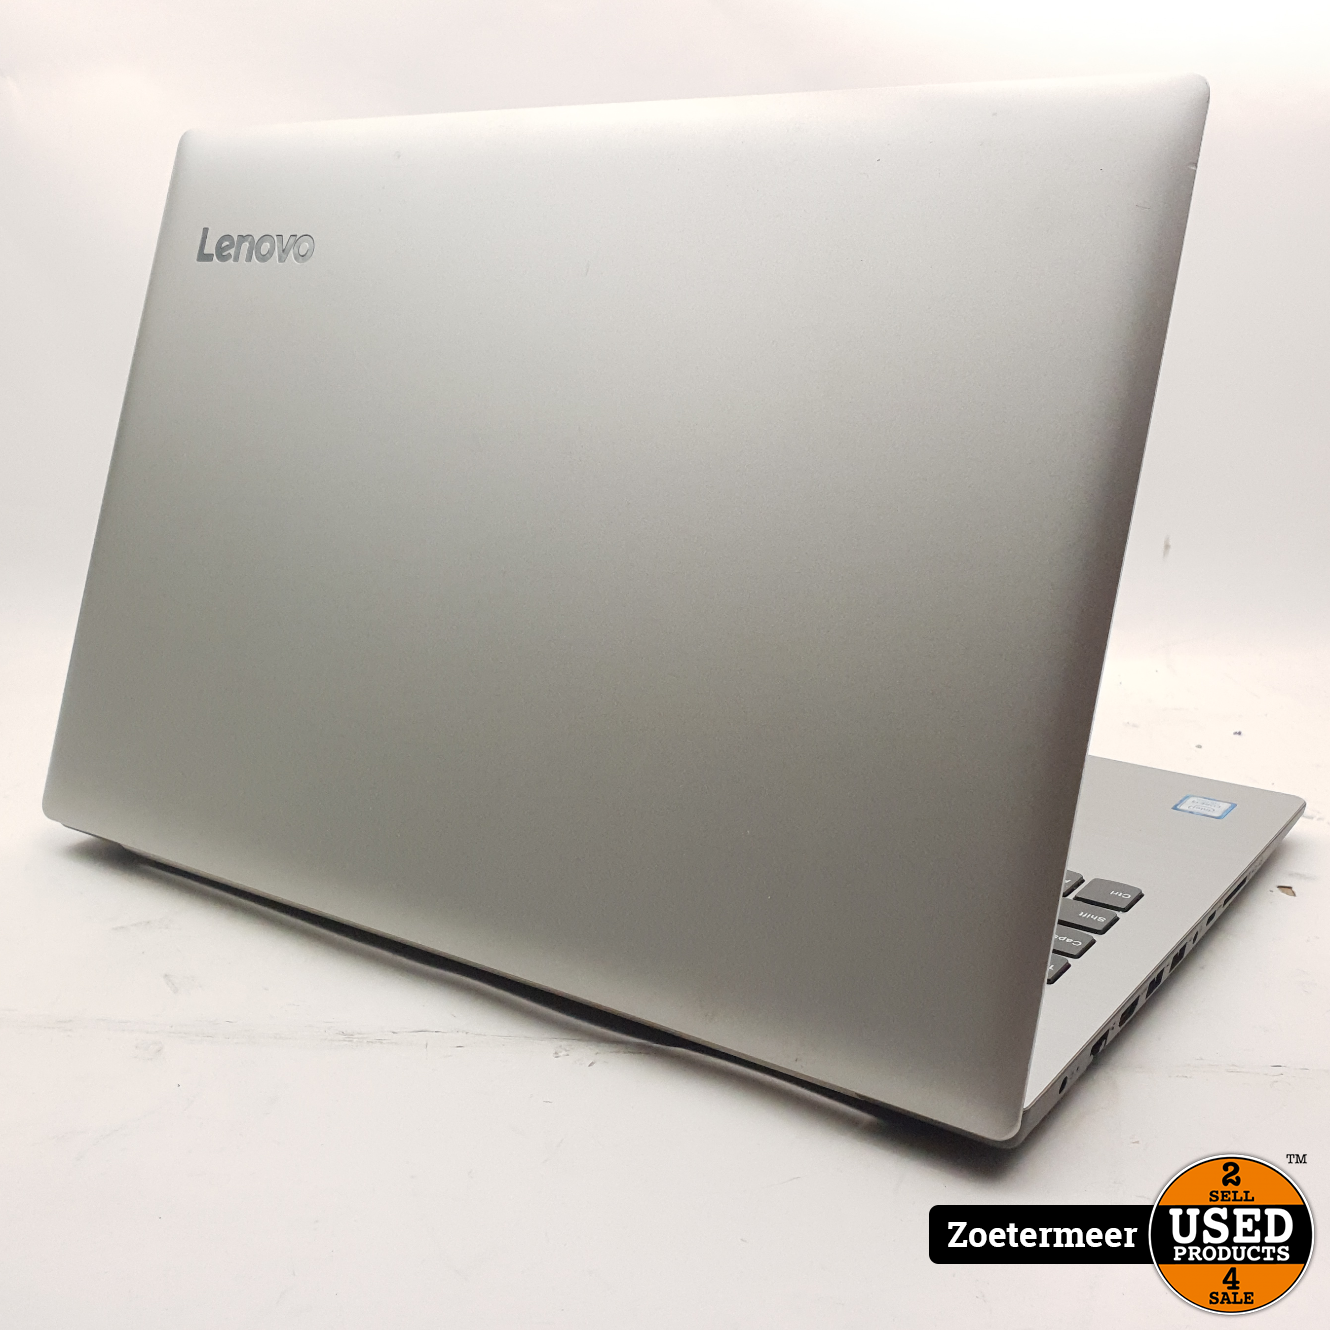 advies Decoratief gesprek Lenovo Laptop I3 II 4GB II 128GB SSD - Used Products Zoetermeer